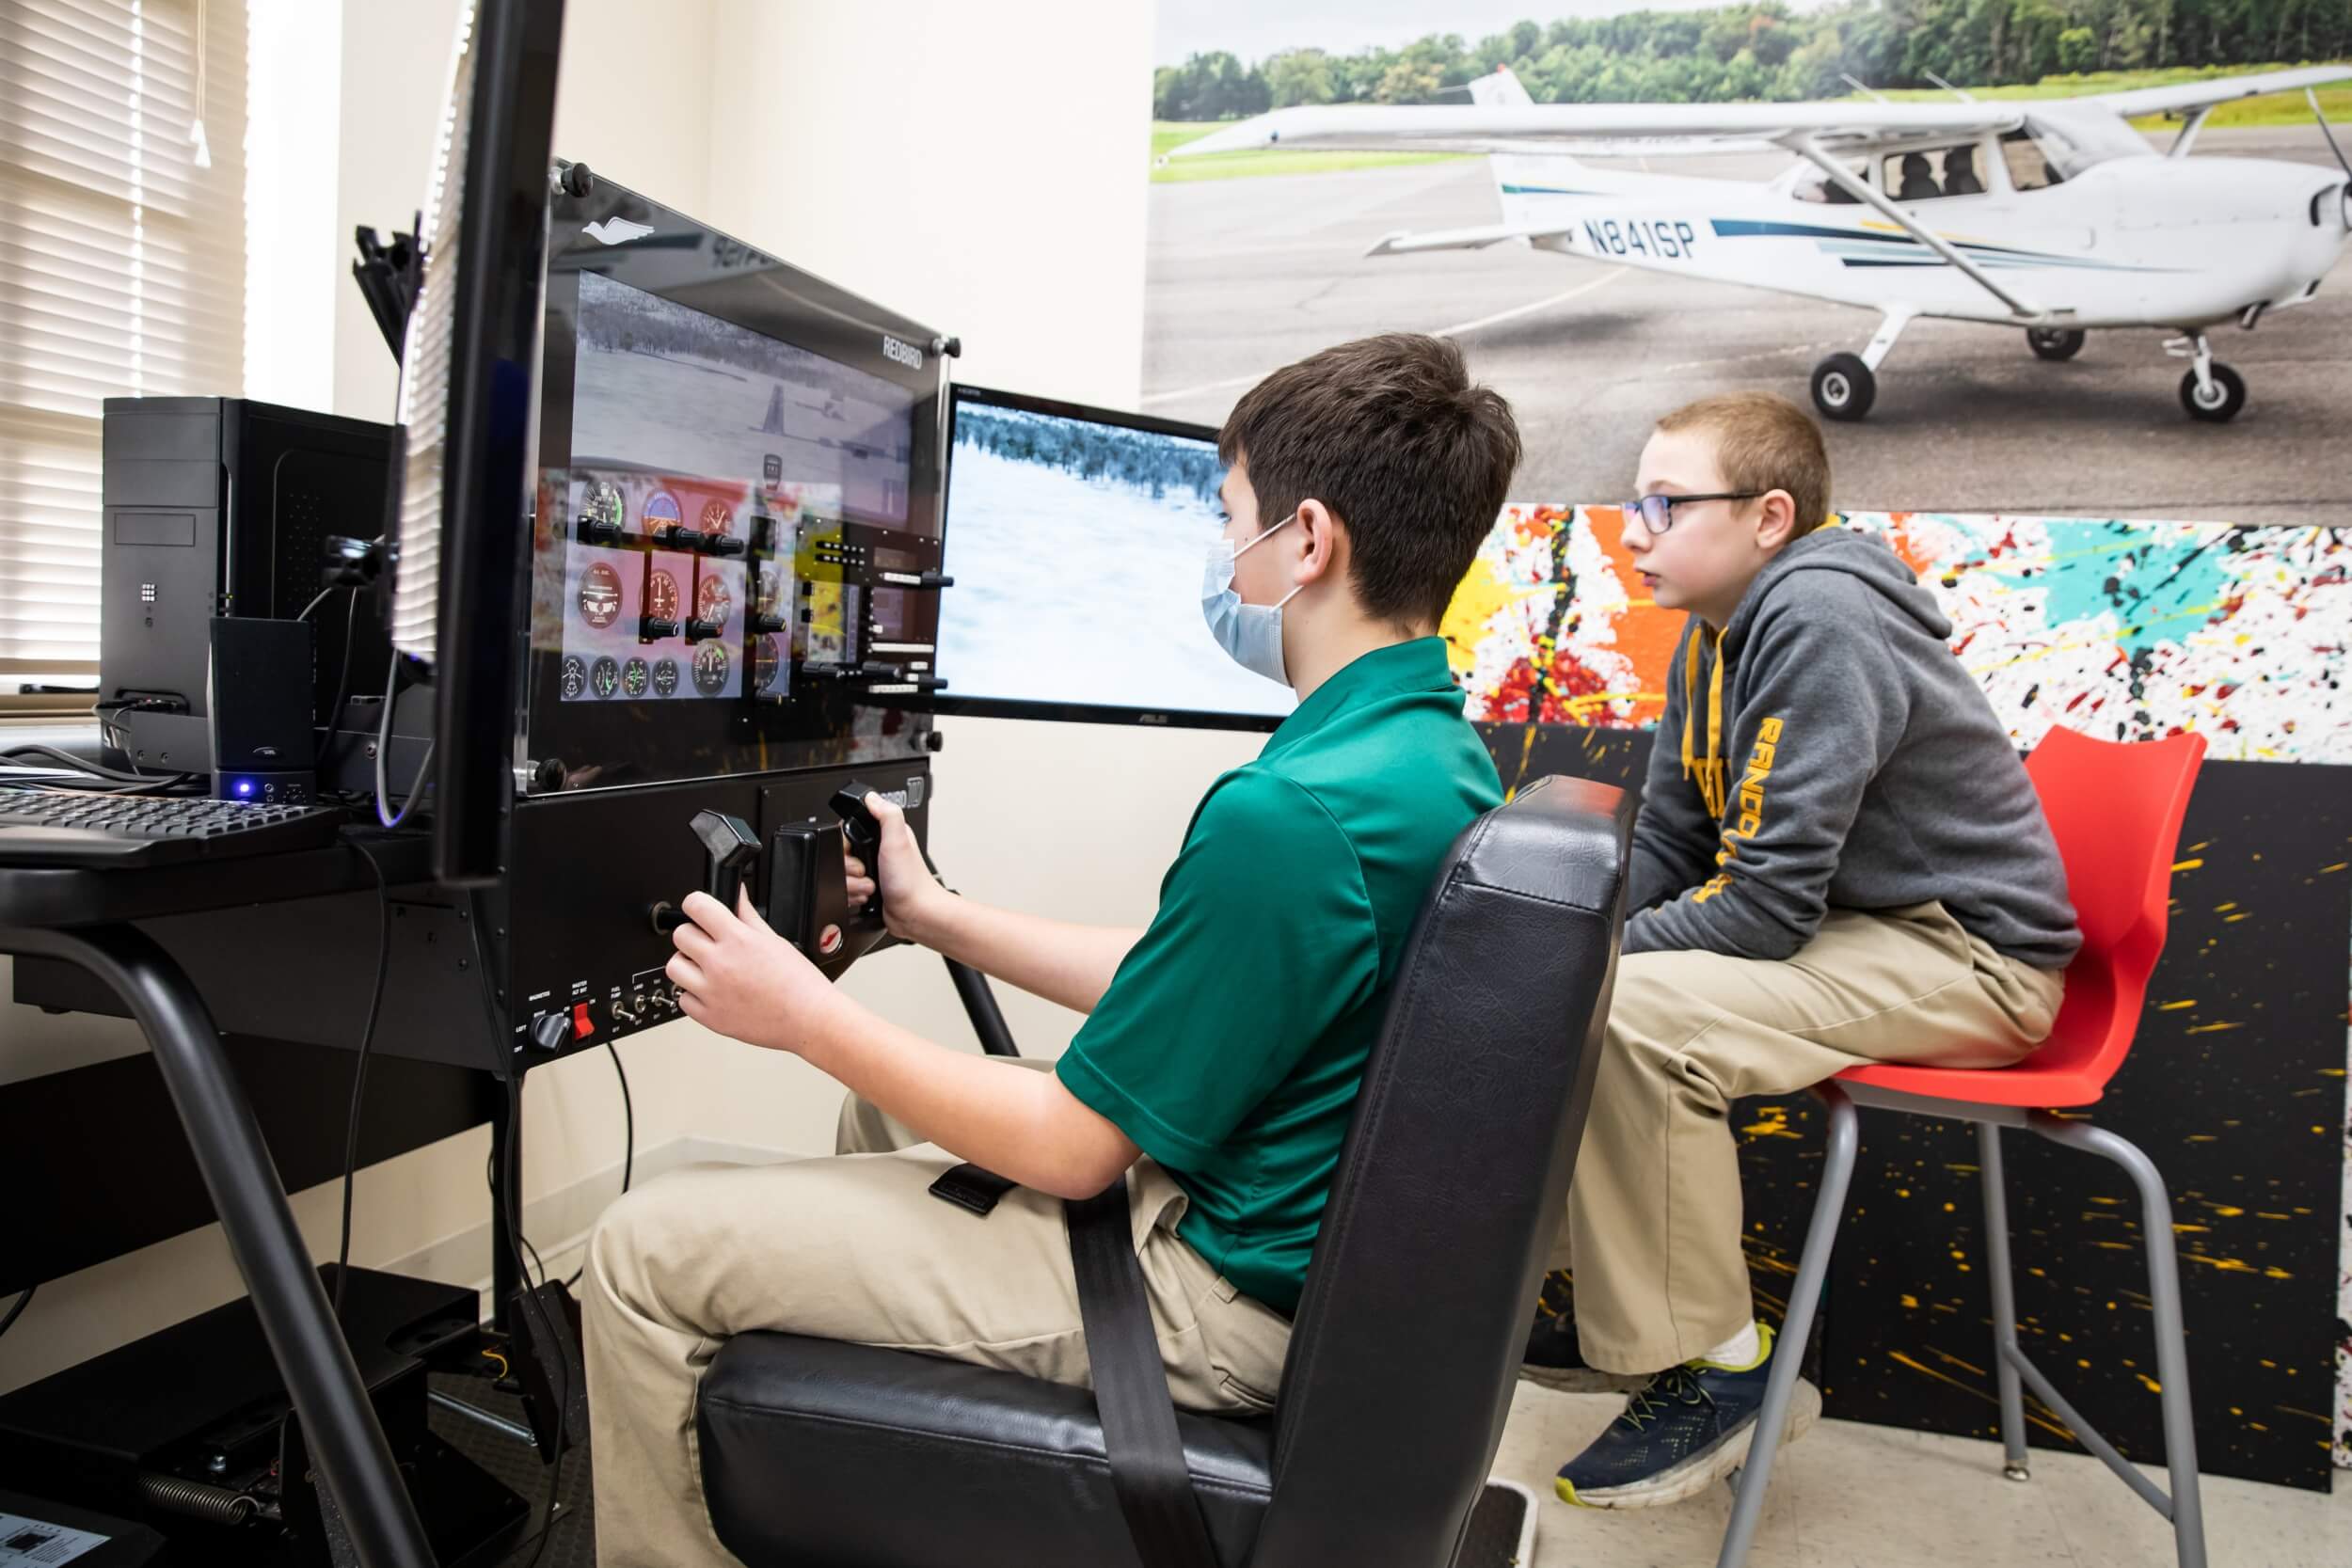 R-MA students in flight simulation training